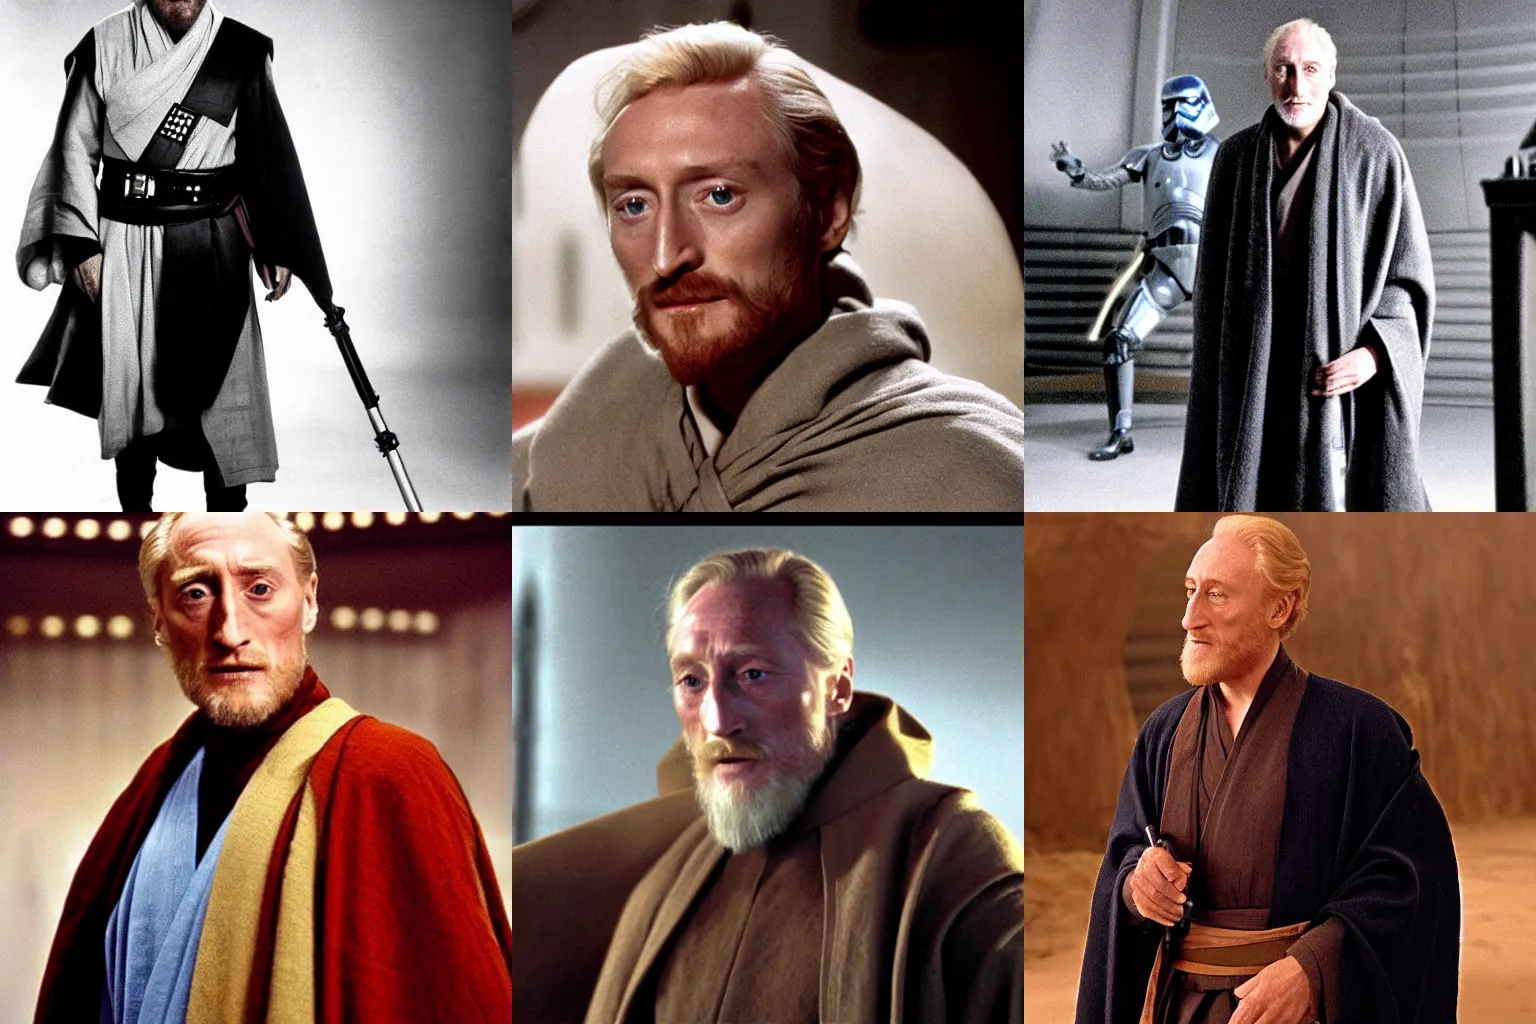 Prompt: Charles Dance as Obi-Wan Kenobi in the film Star Wars